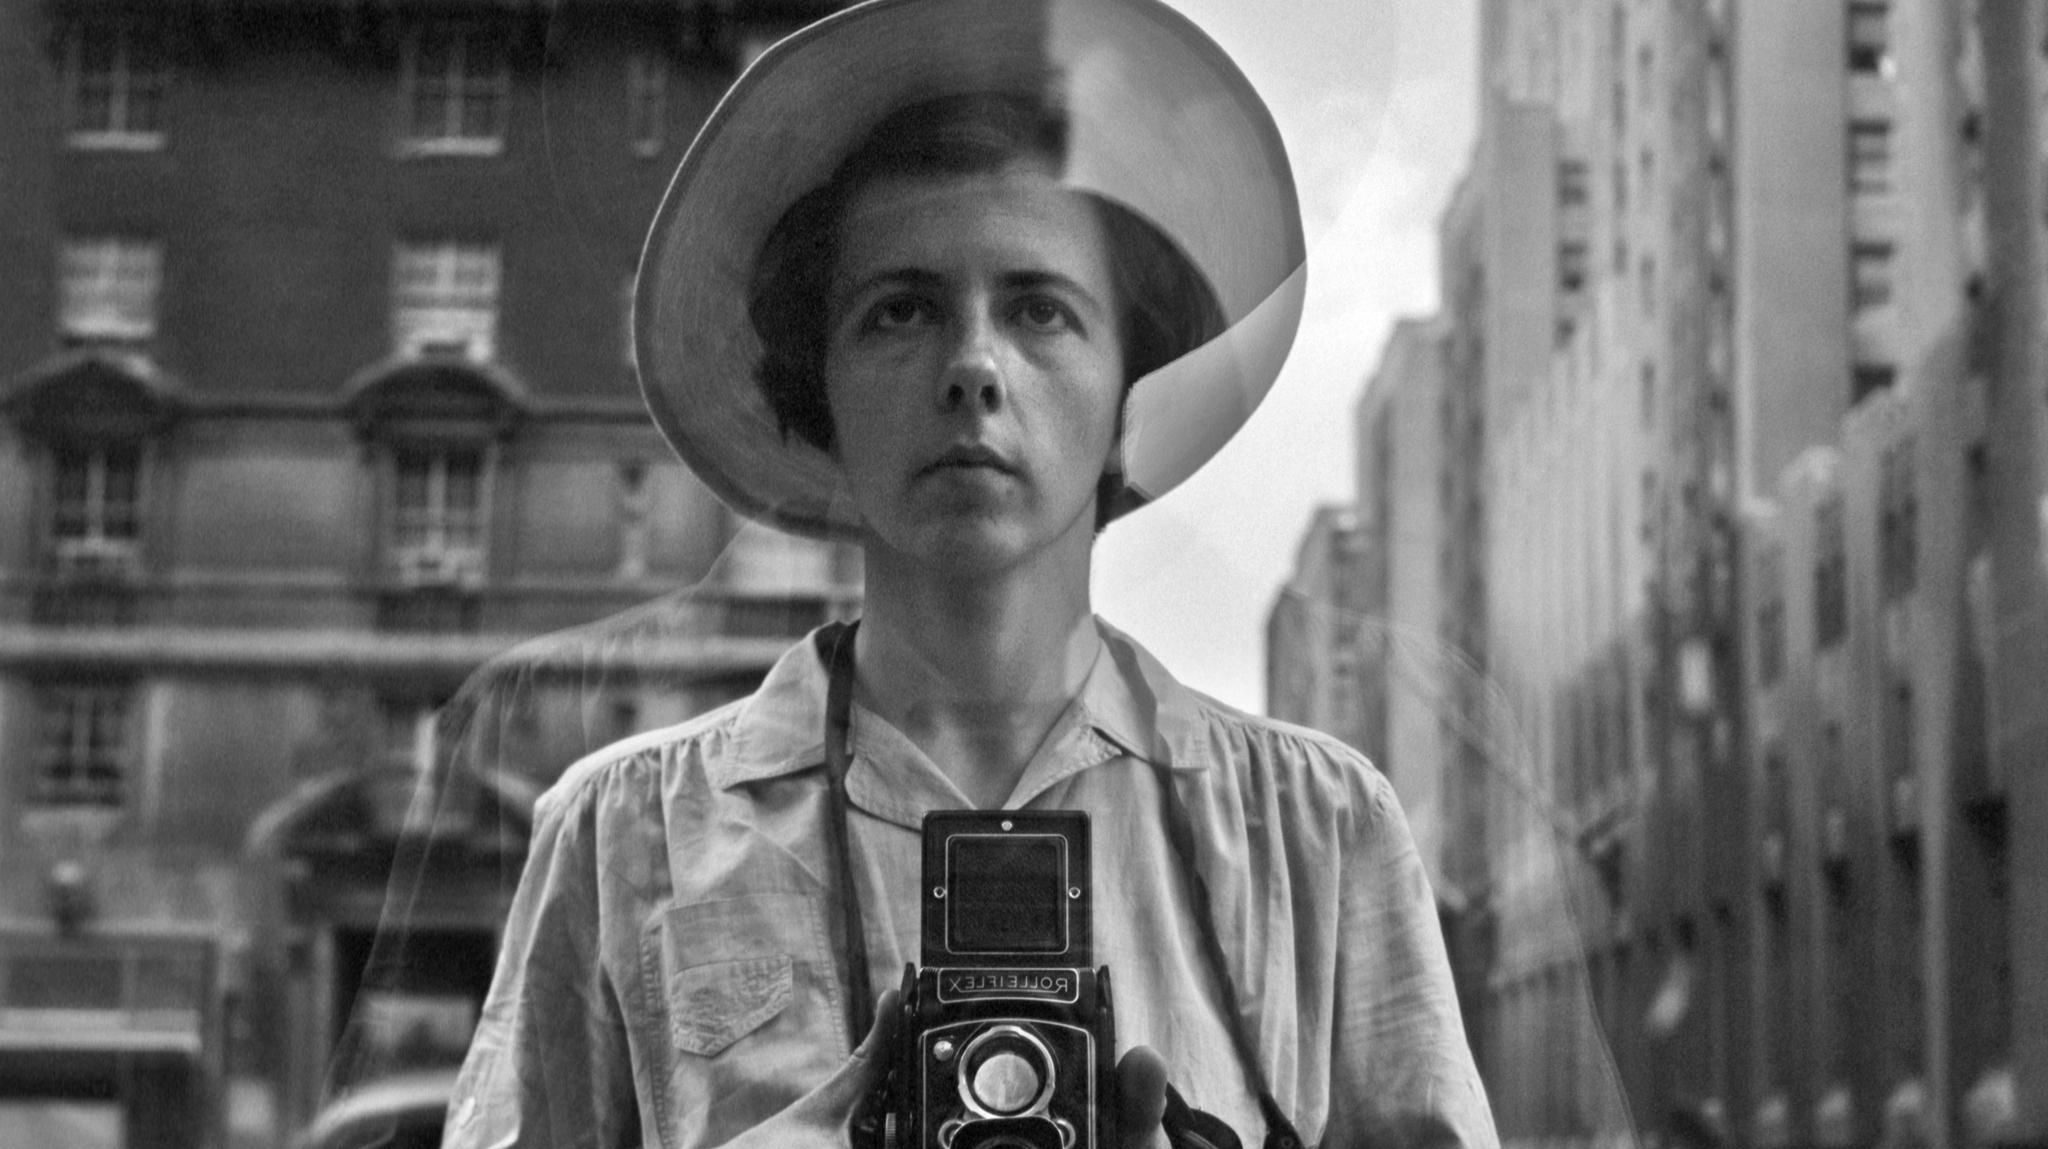 Recently discovered street photographer, Vivian Maier